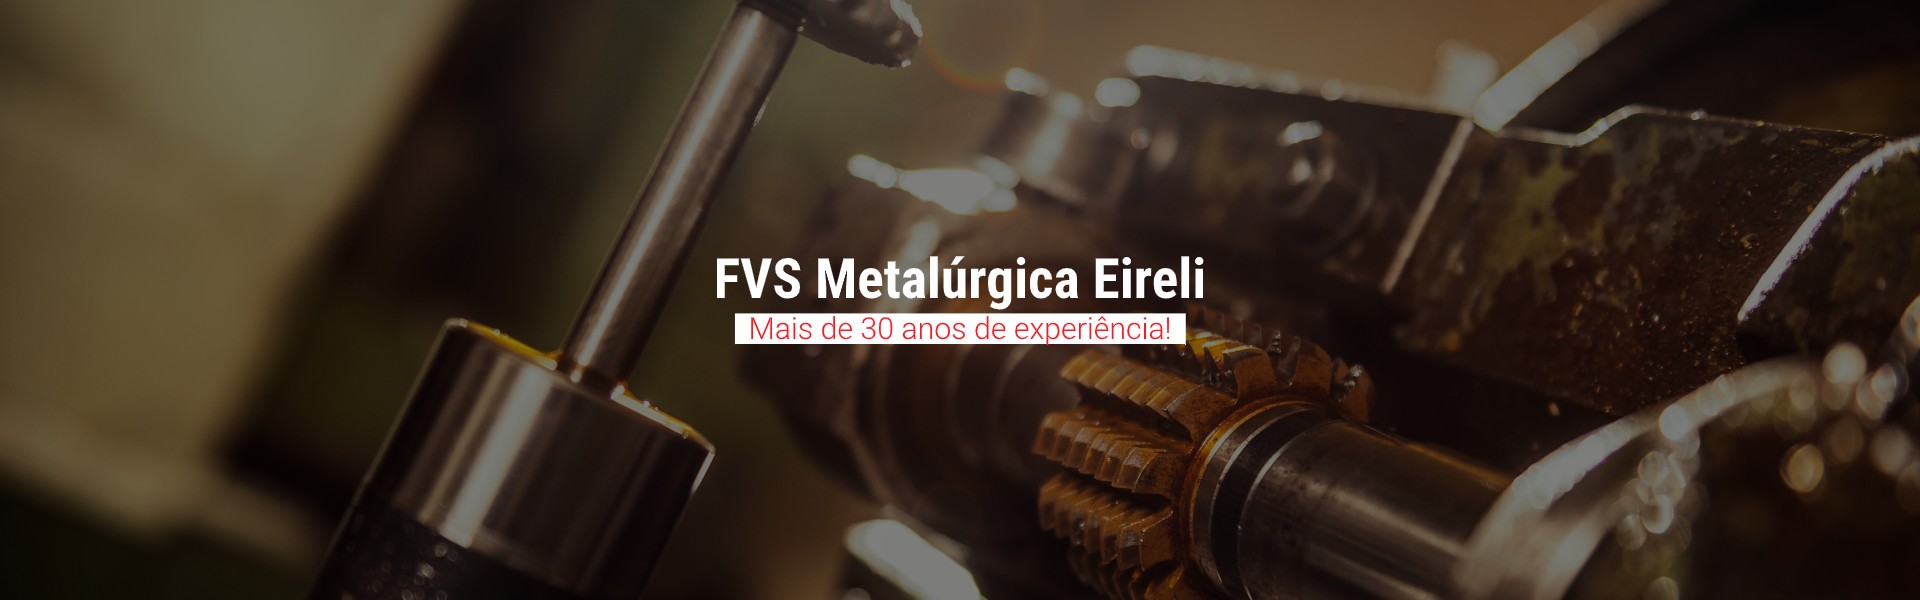 FVS Metalúrgica